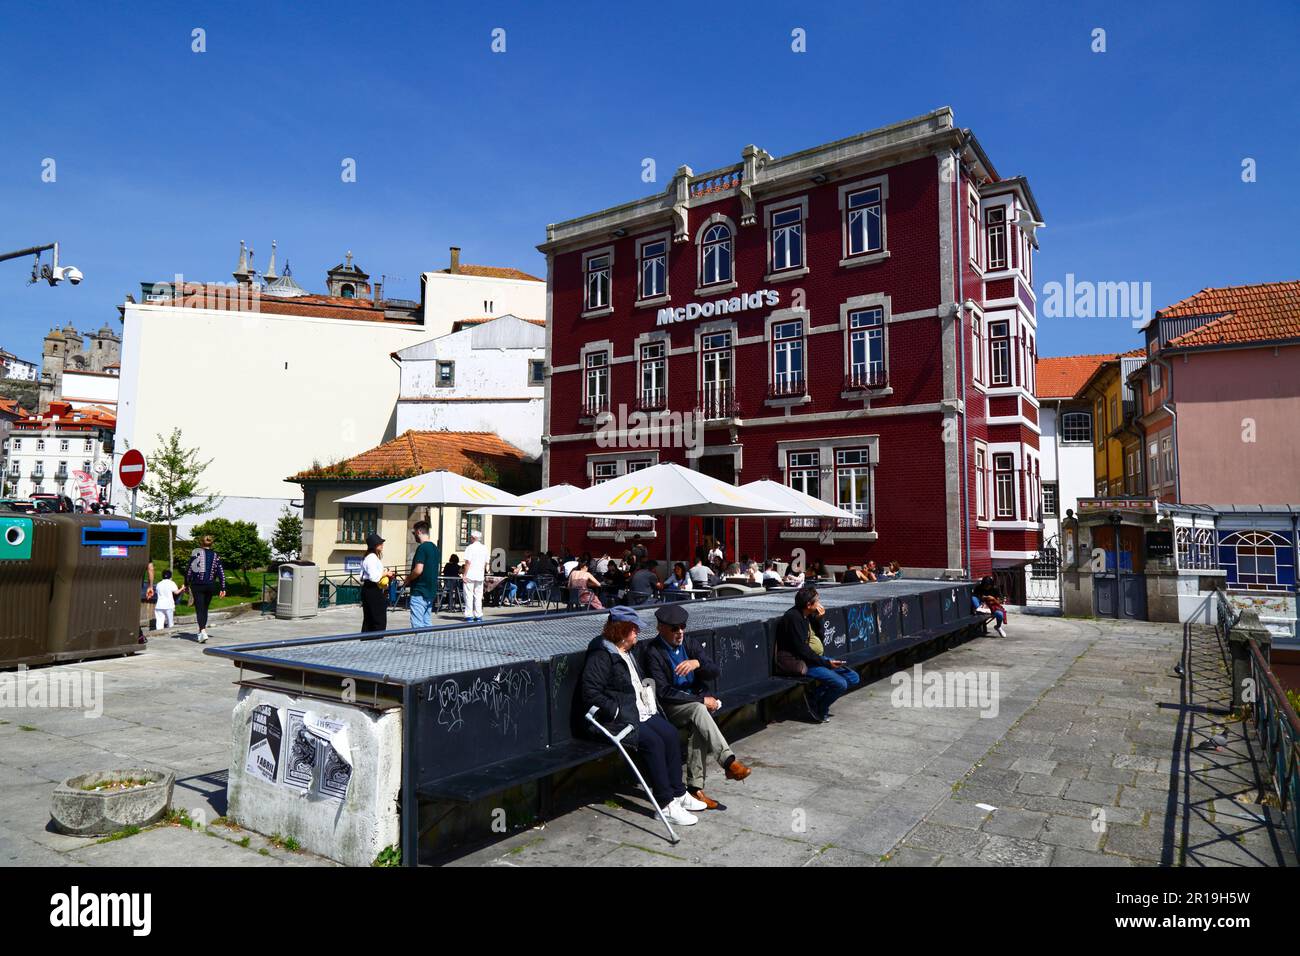 People sitting in square in front of McDonald's fast food outlet on Rua da Reboleira, Ribeira district, Porto / Oporto, Portugal Stock Photo